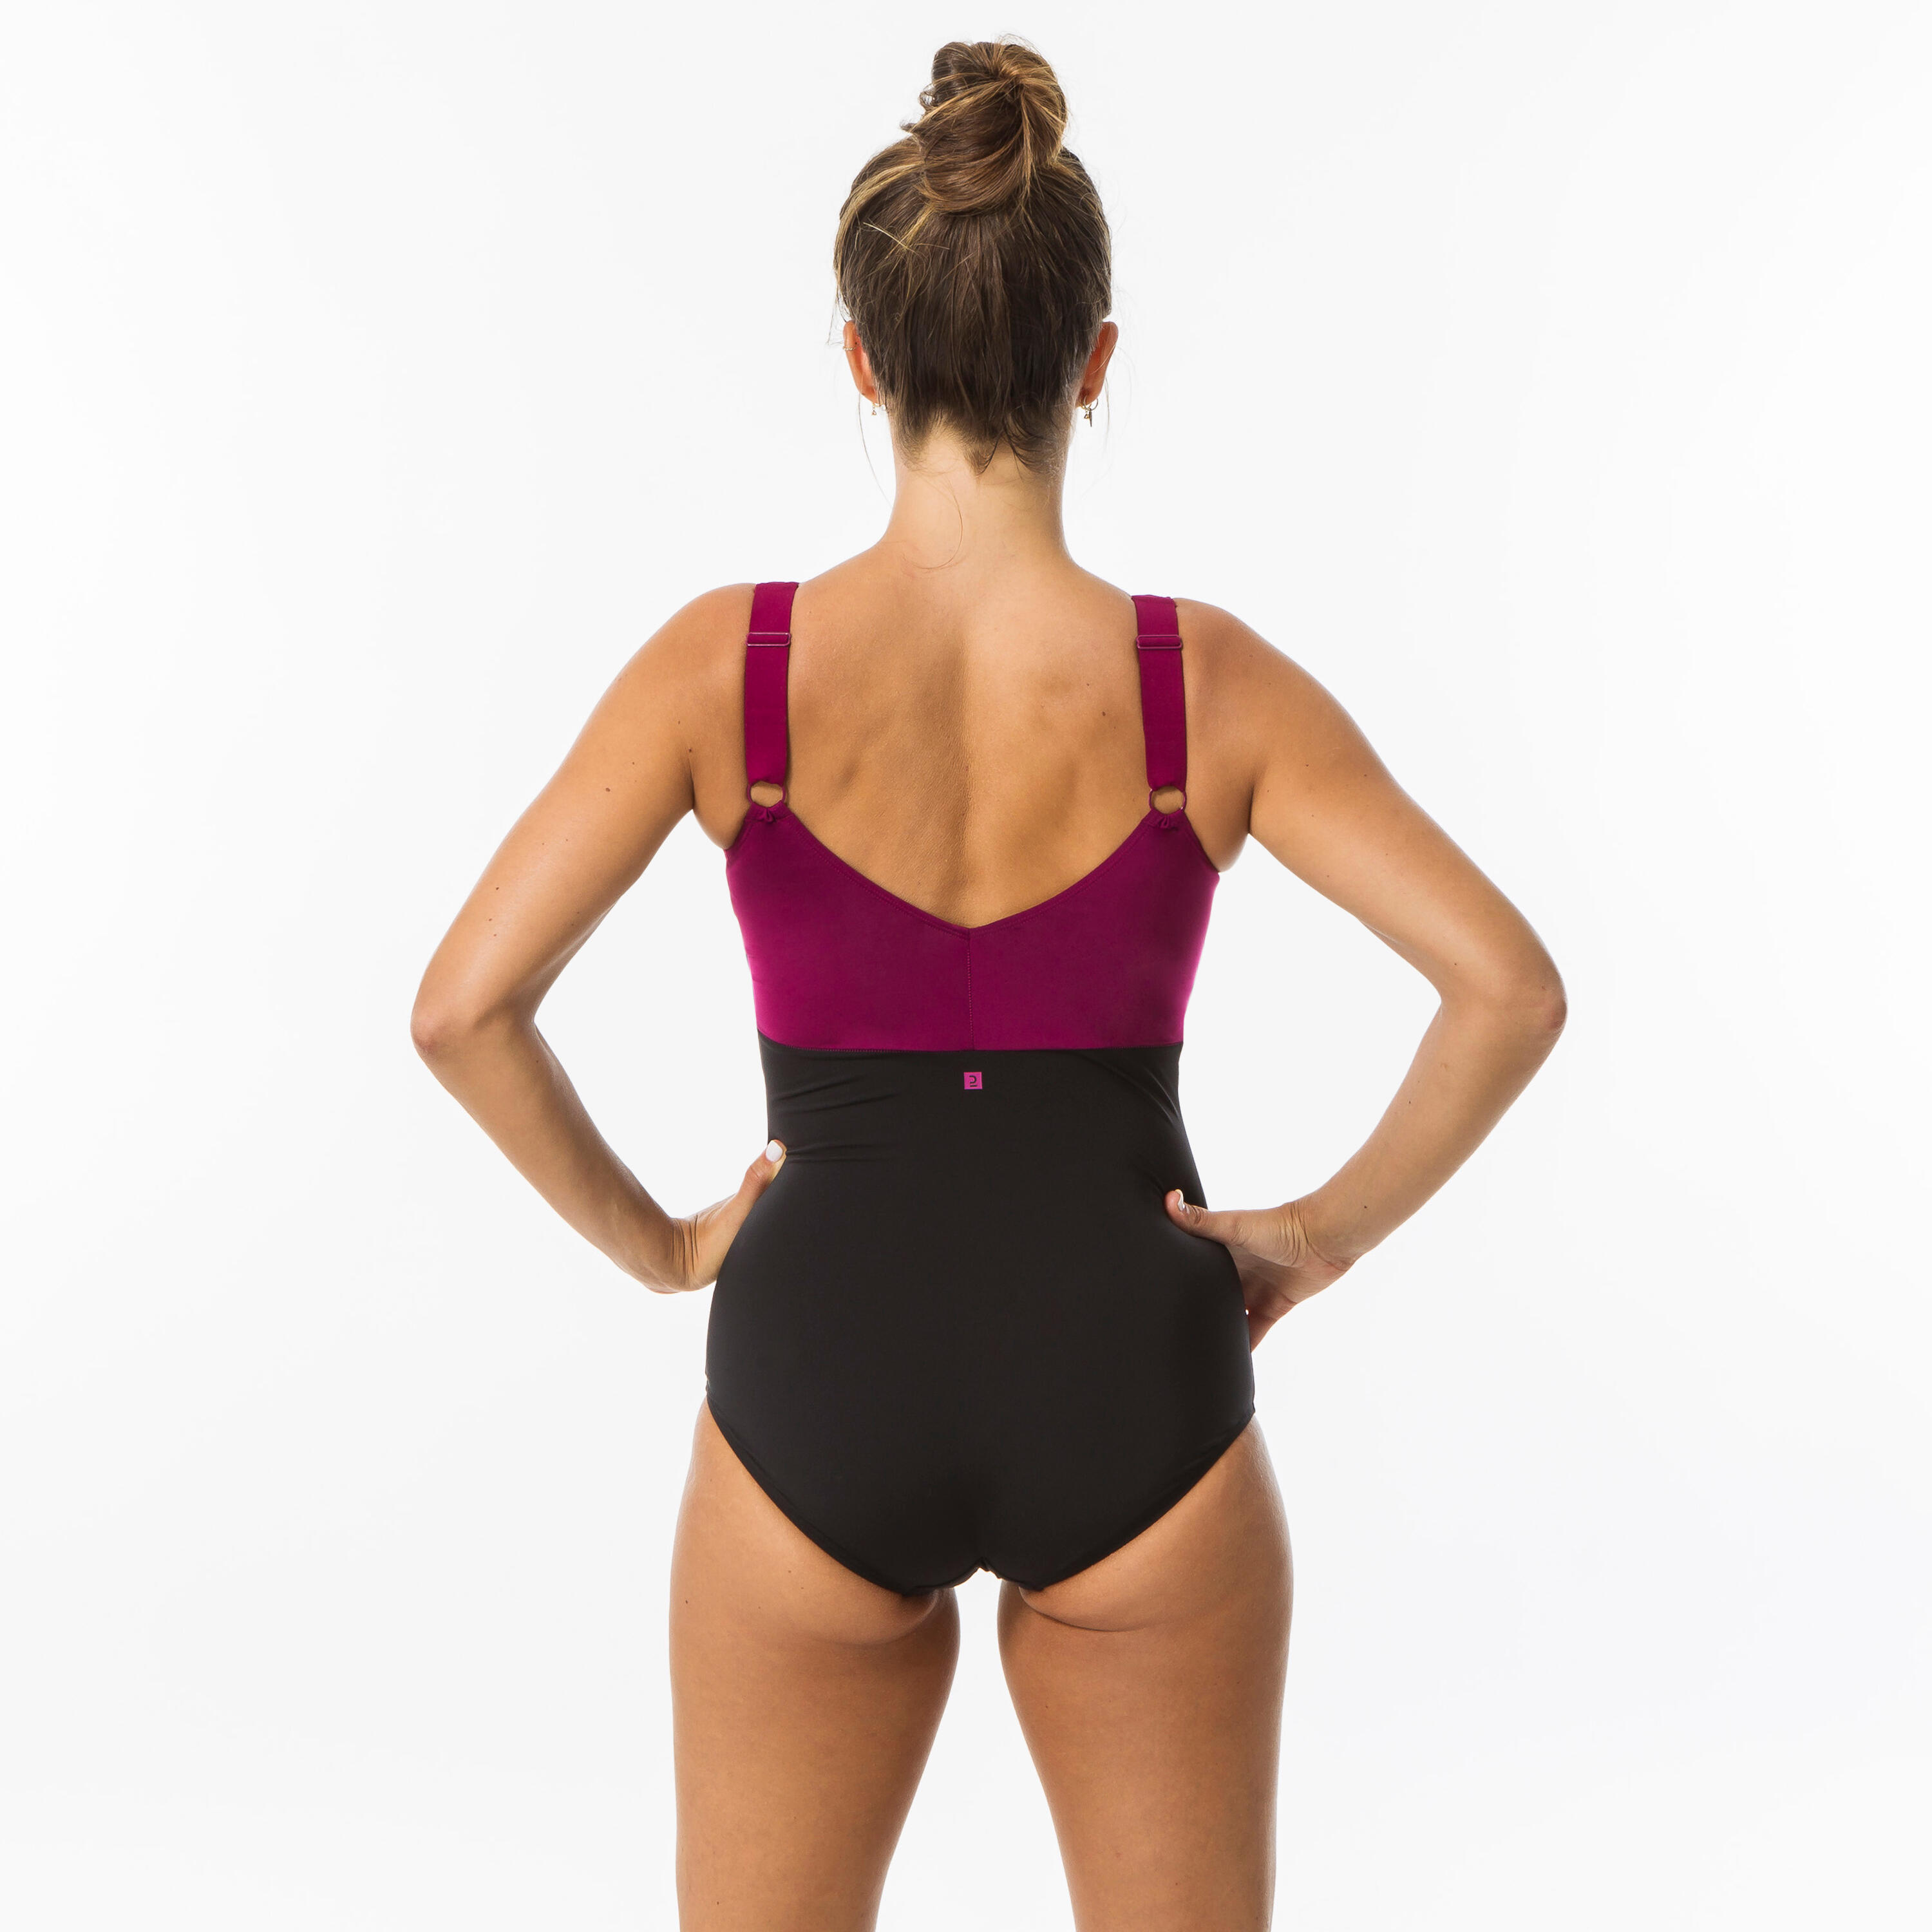 Women's Aquafitness one-piece swimsuit Romi - Black Pink 4/11